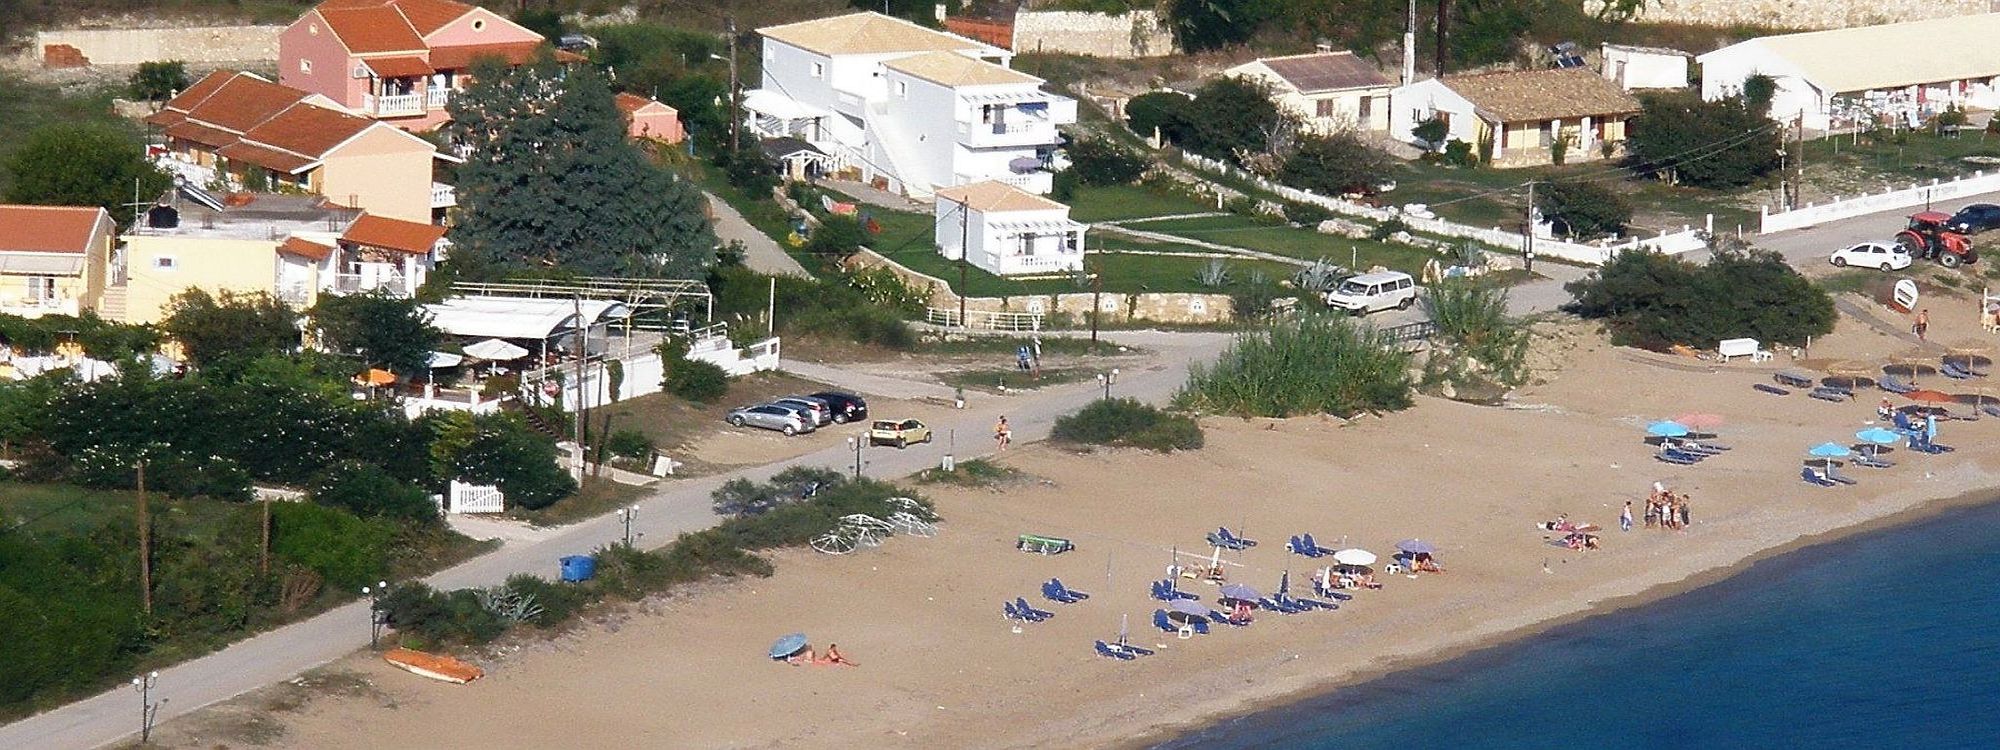 Corfu/Korfoe strandvakantie